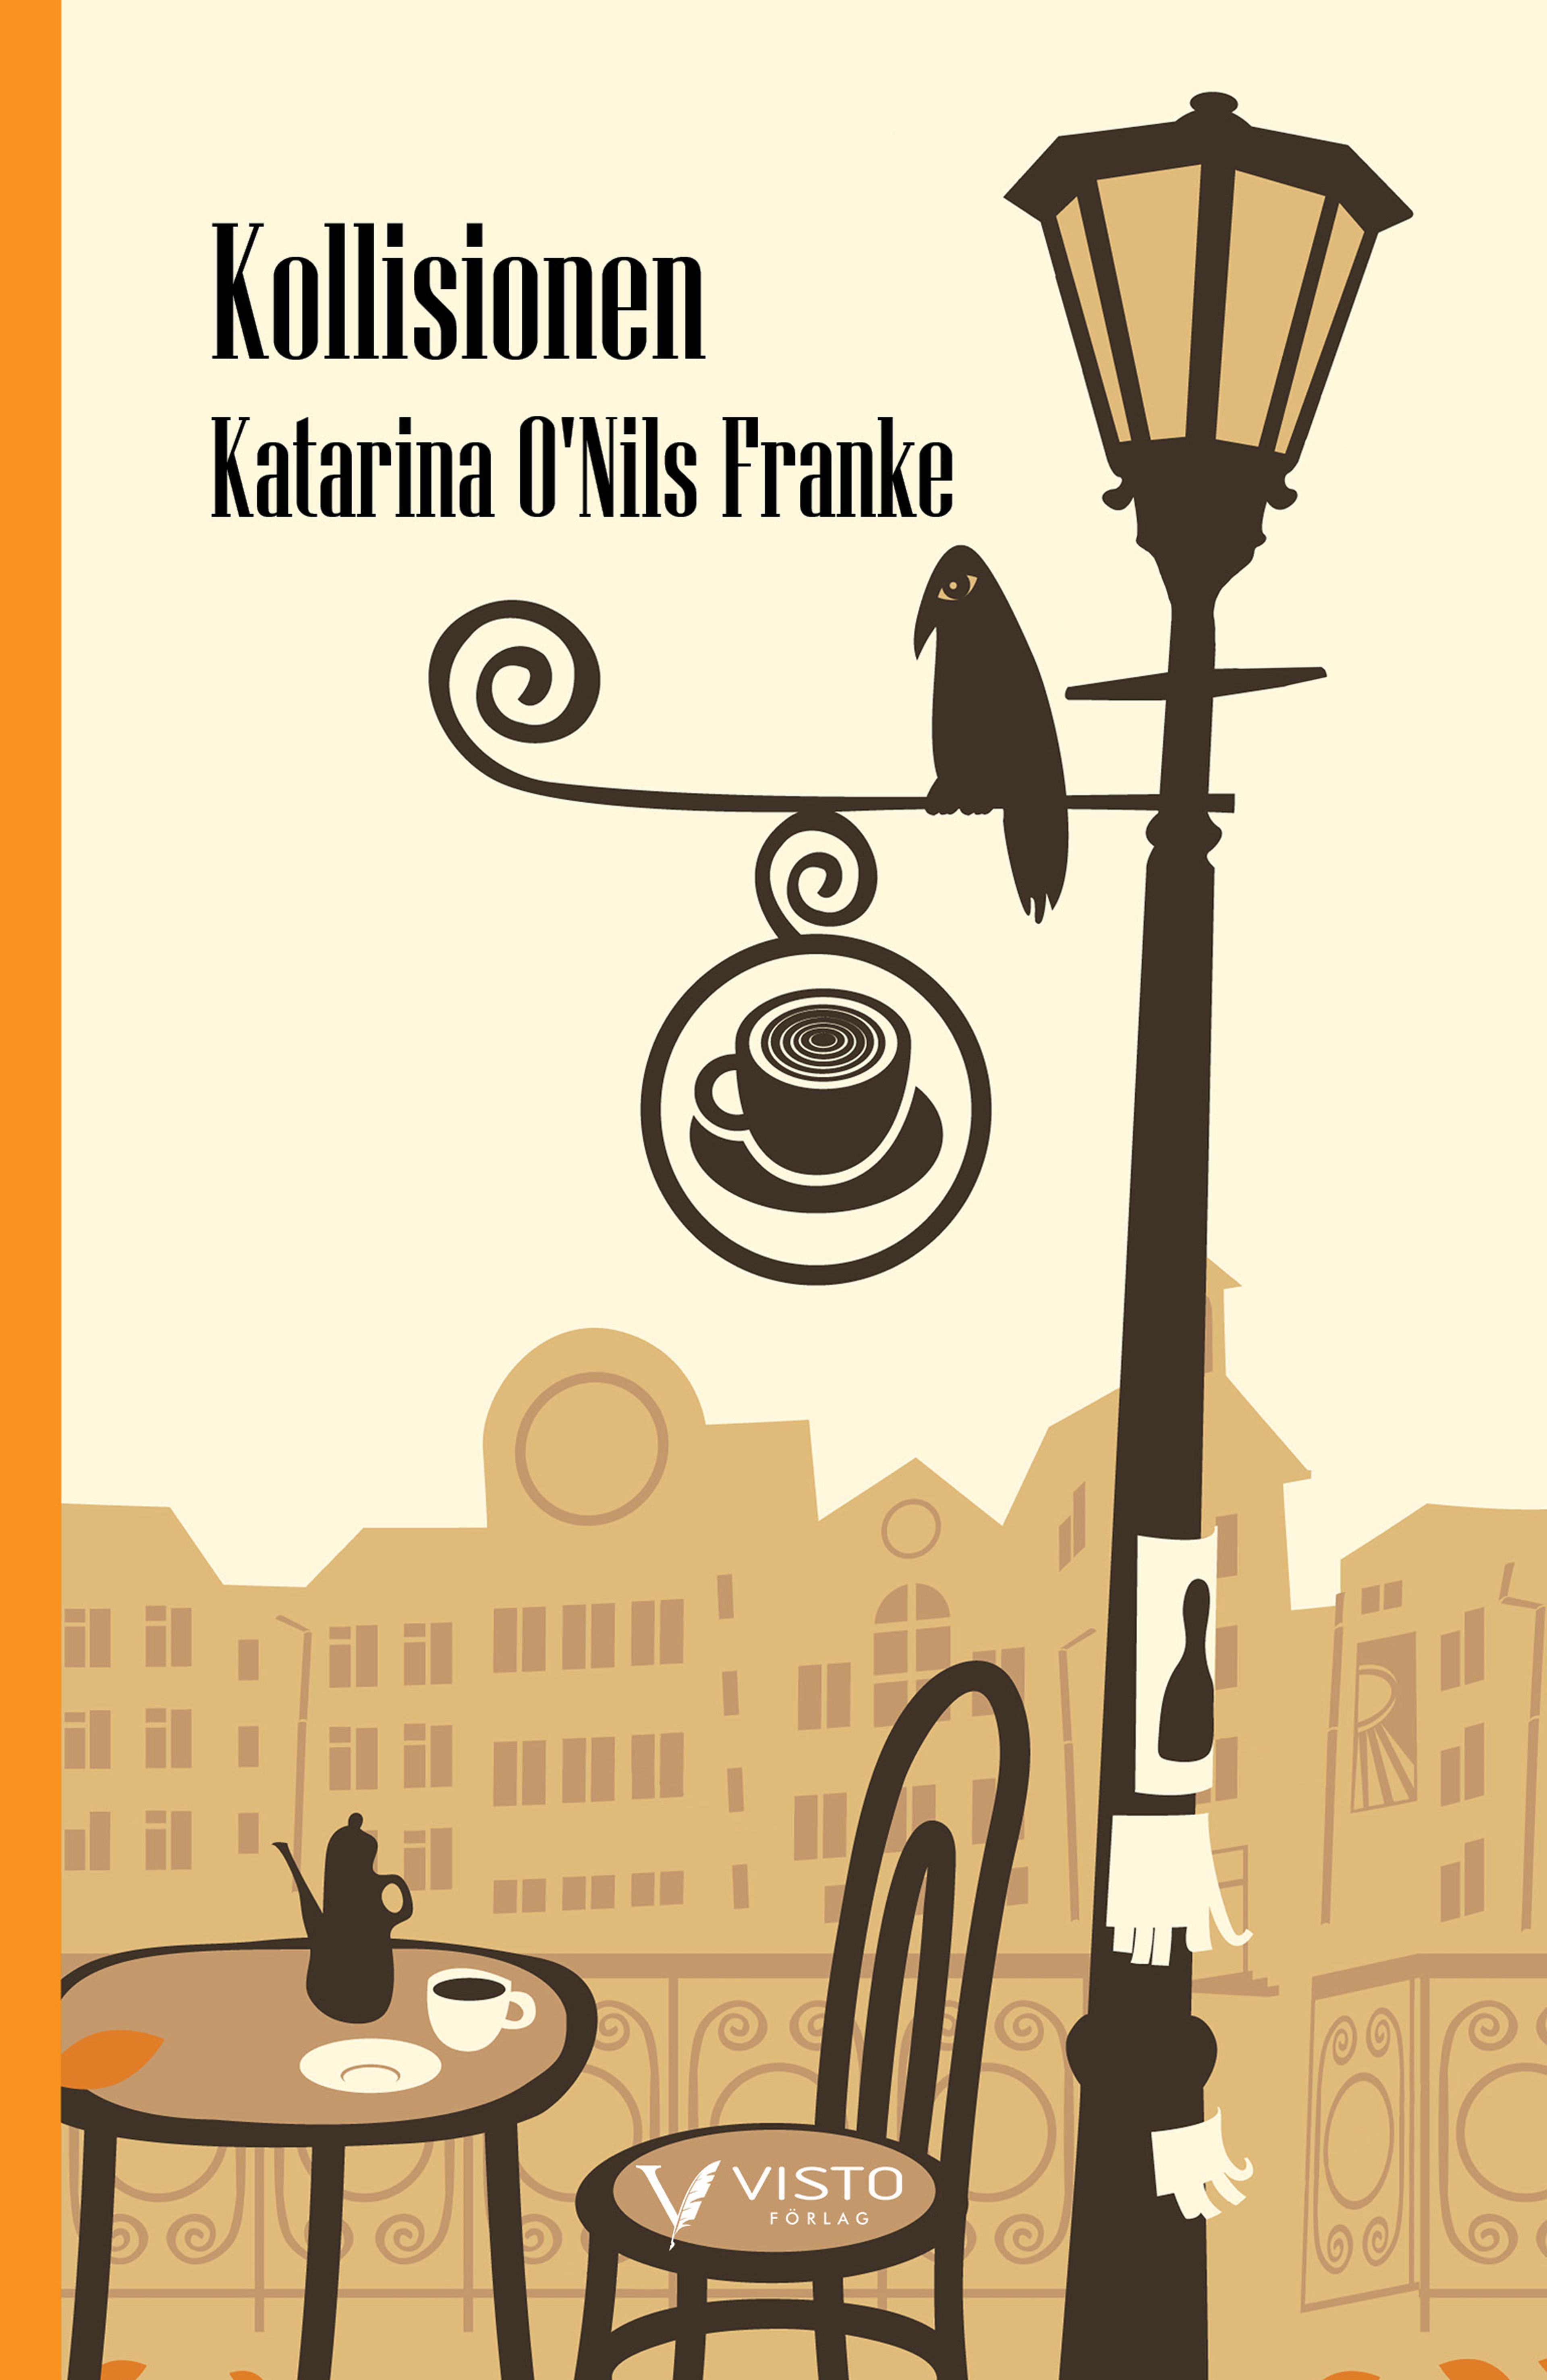 Kollisionen, eBook by Katarina O'Nils Franke